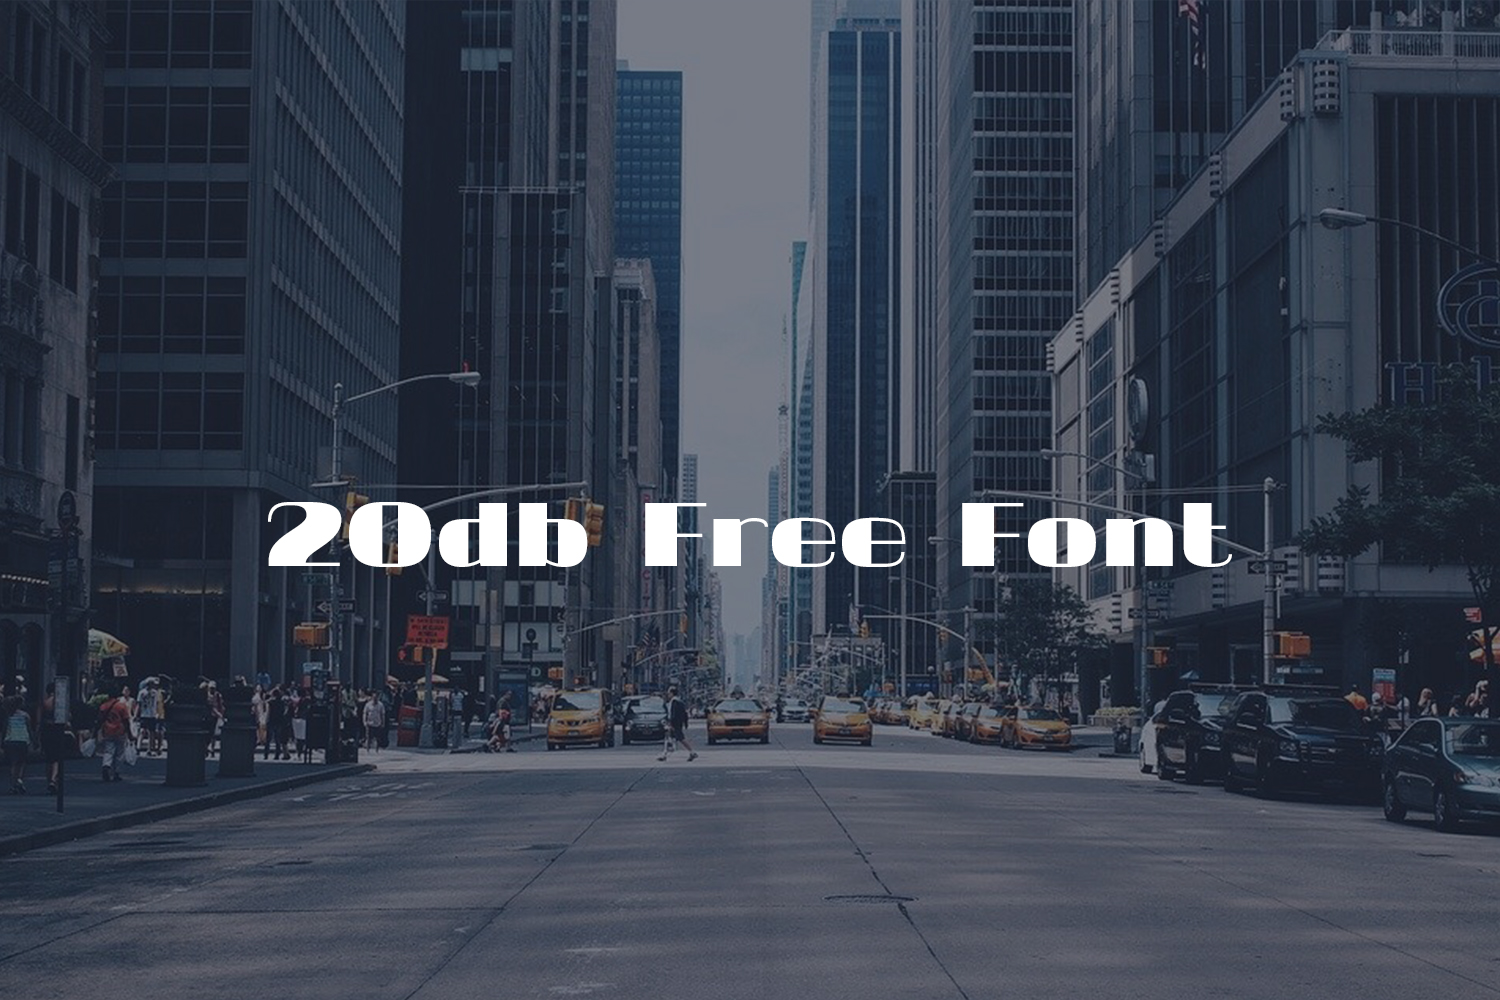 20db Free Font